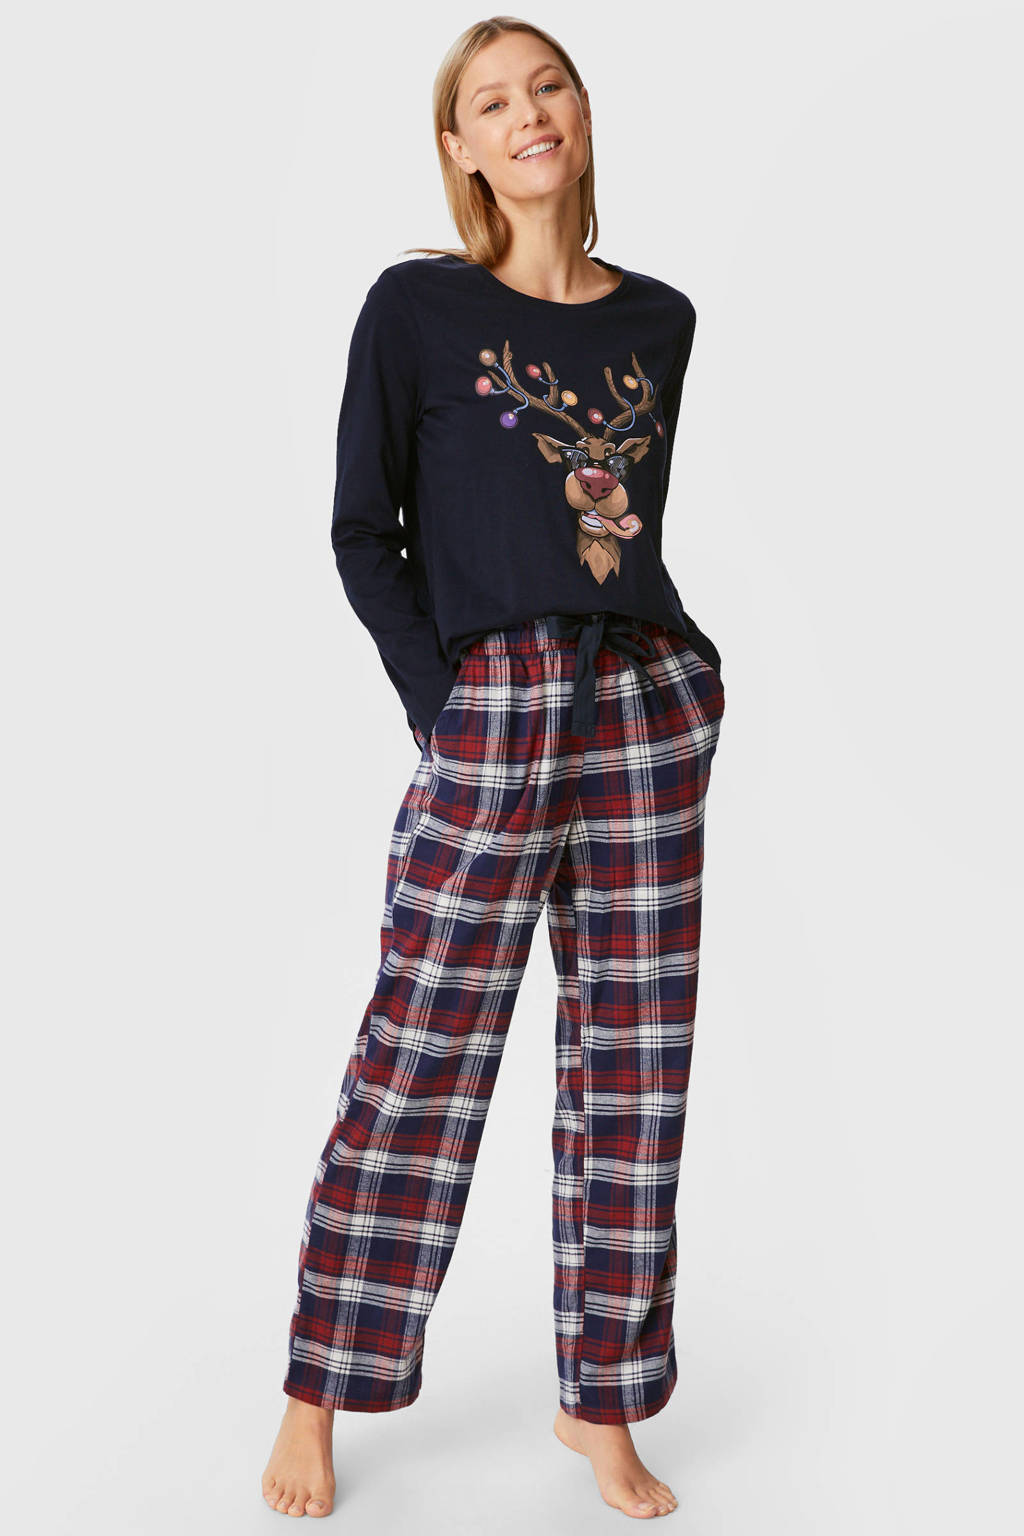 C&A pyjama met kerst print donkerblauw/rood, Donkerblauw/rood